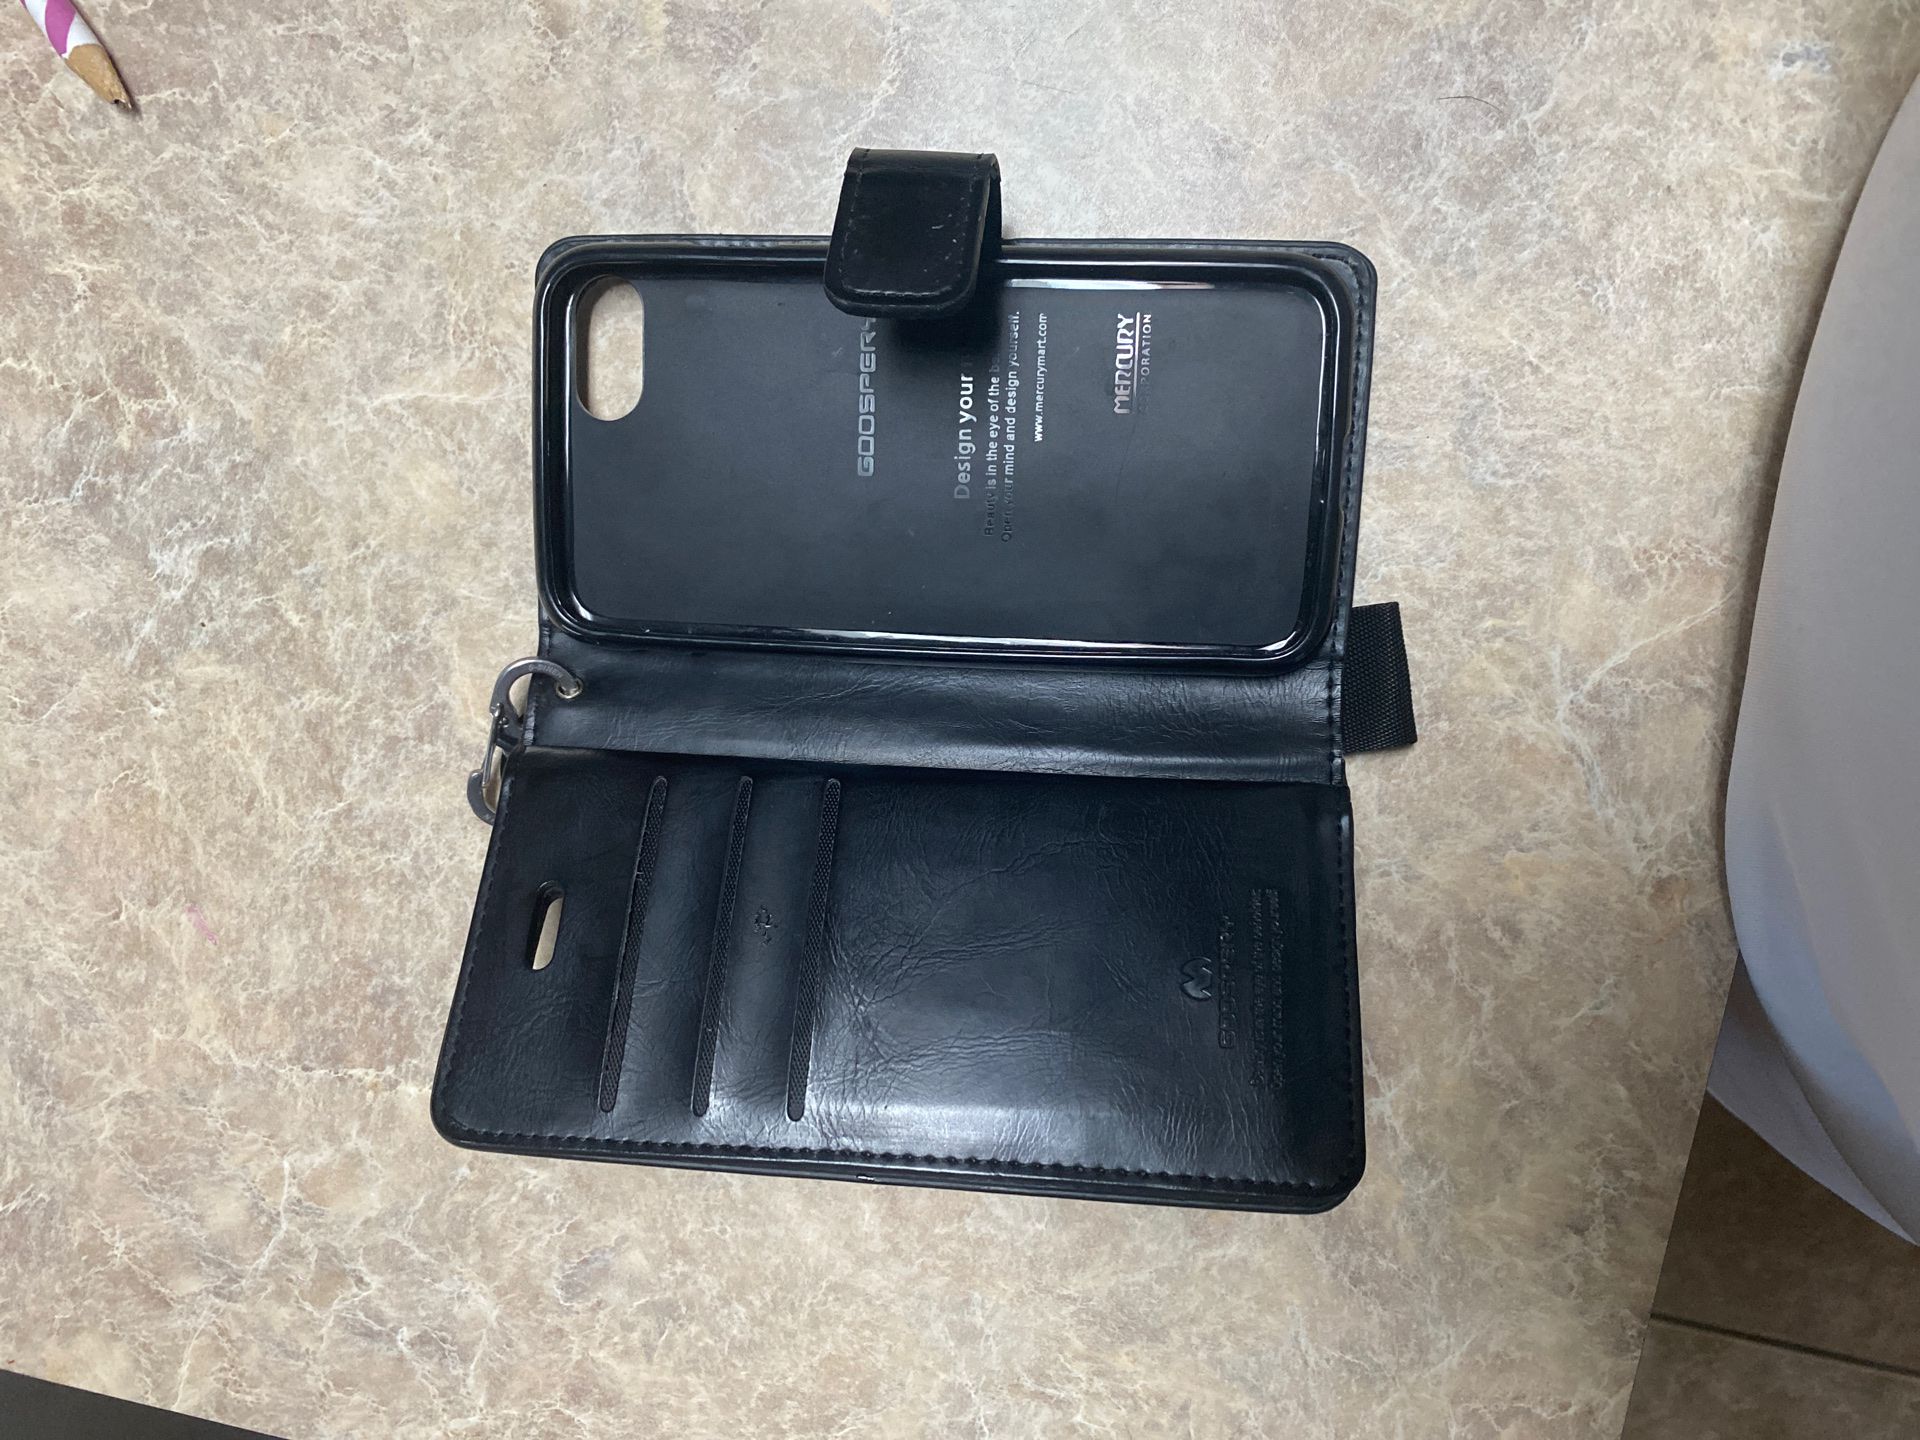 Goospery wallet case for iPhone 7/8